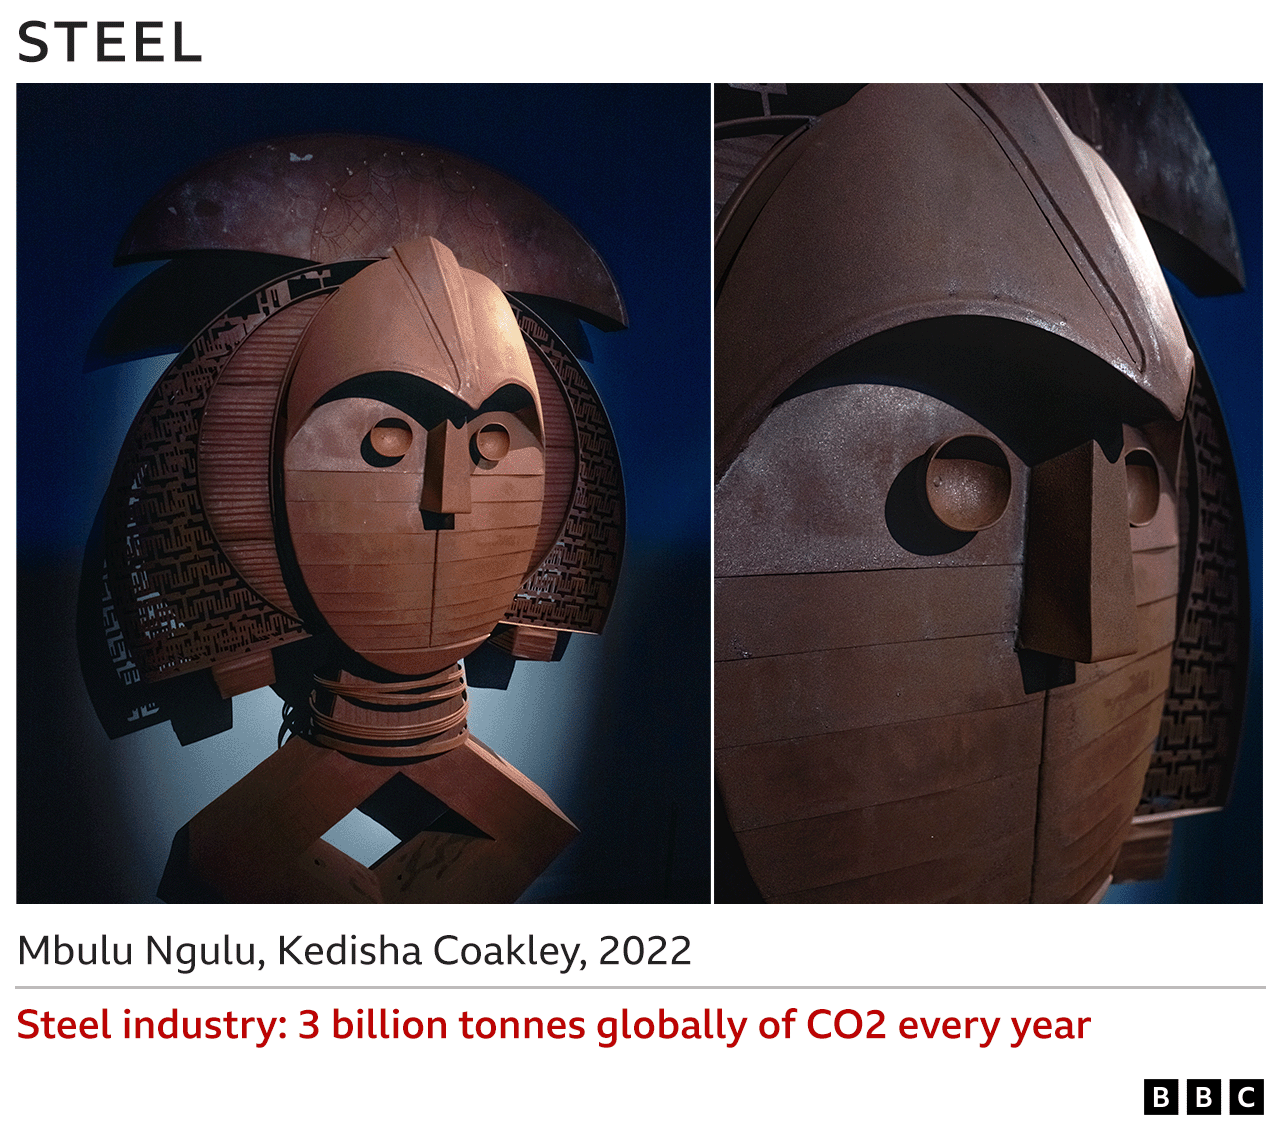 Images of steel sculpture - Mbulu Ngulu, Kedisha Coakley, 2022 - Steel industry 3bn tonnes globally of CO2 every year